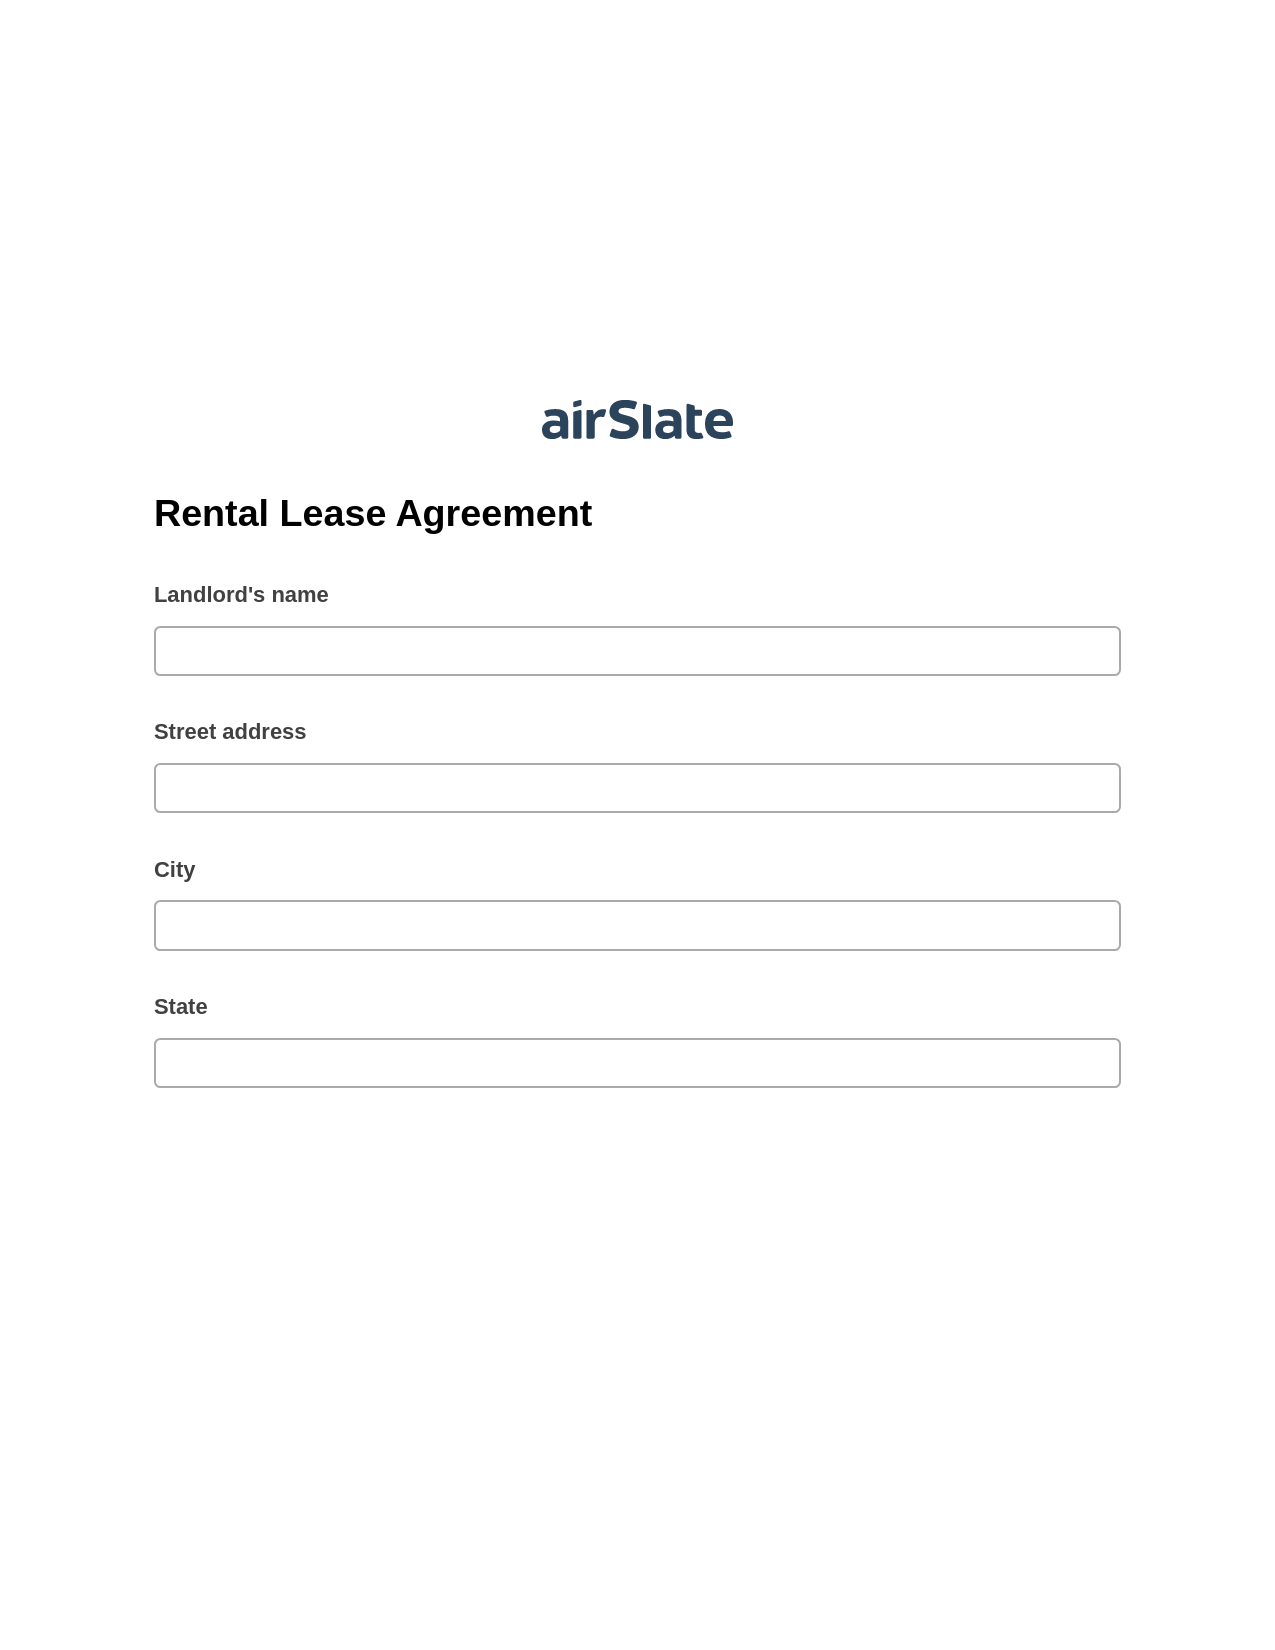 Rental Lease Agreement Pre-fill from Google Sheets Bot, Google Cloud Print Bot, Google Drive Bot